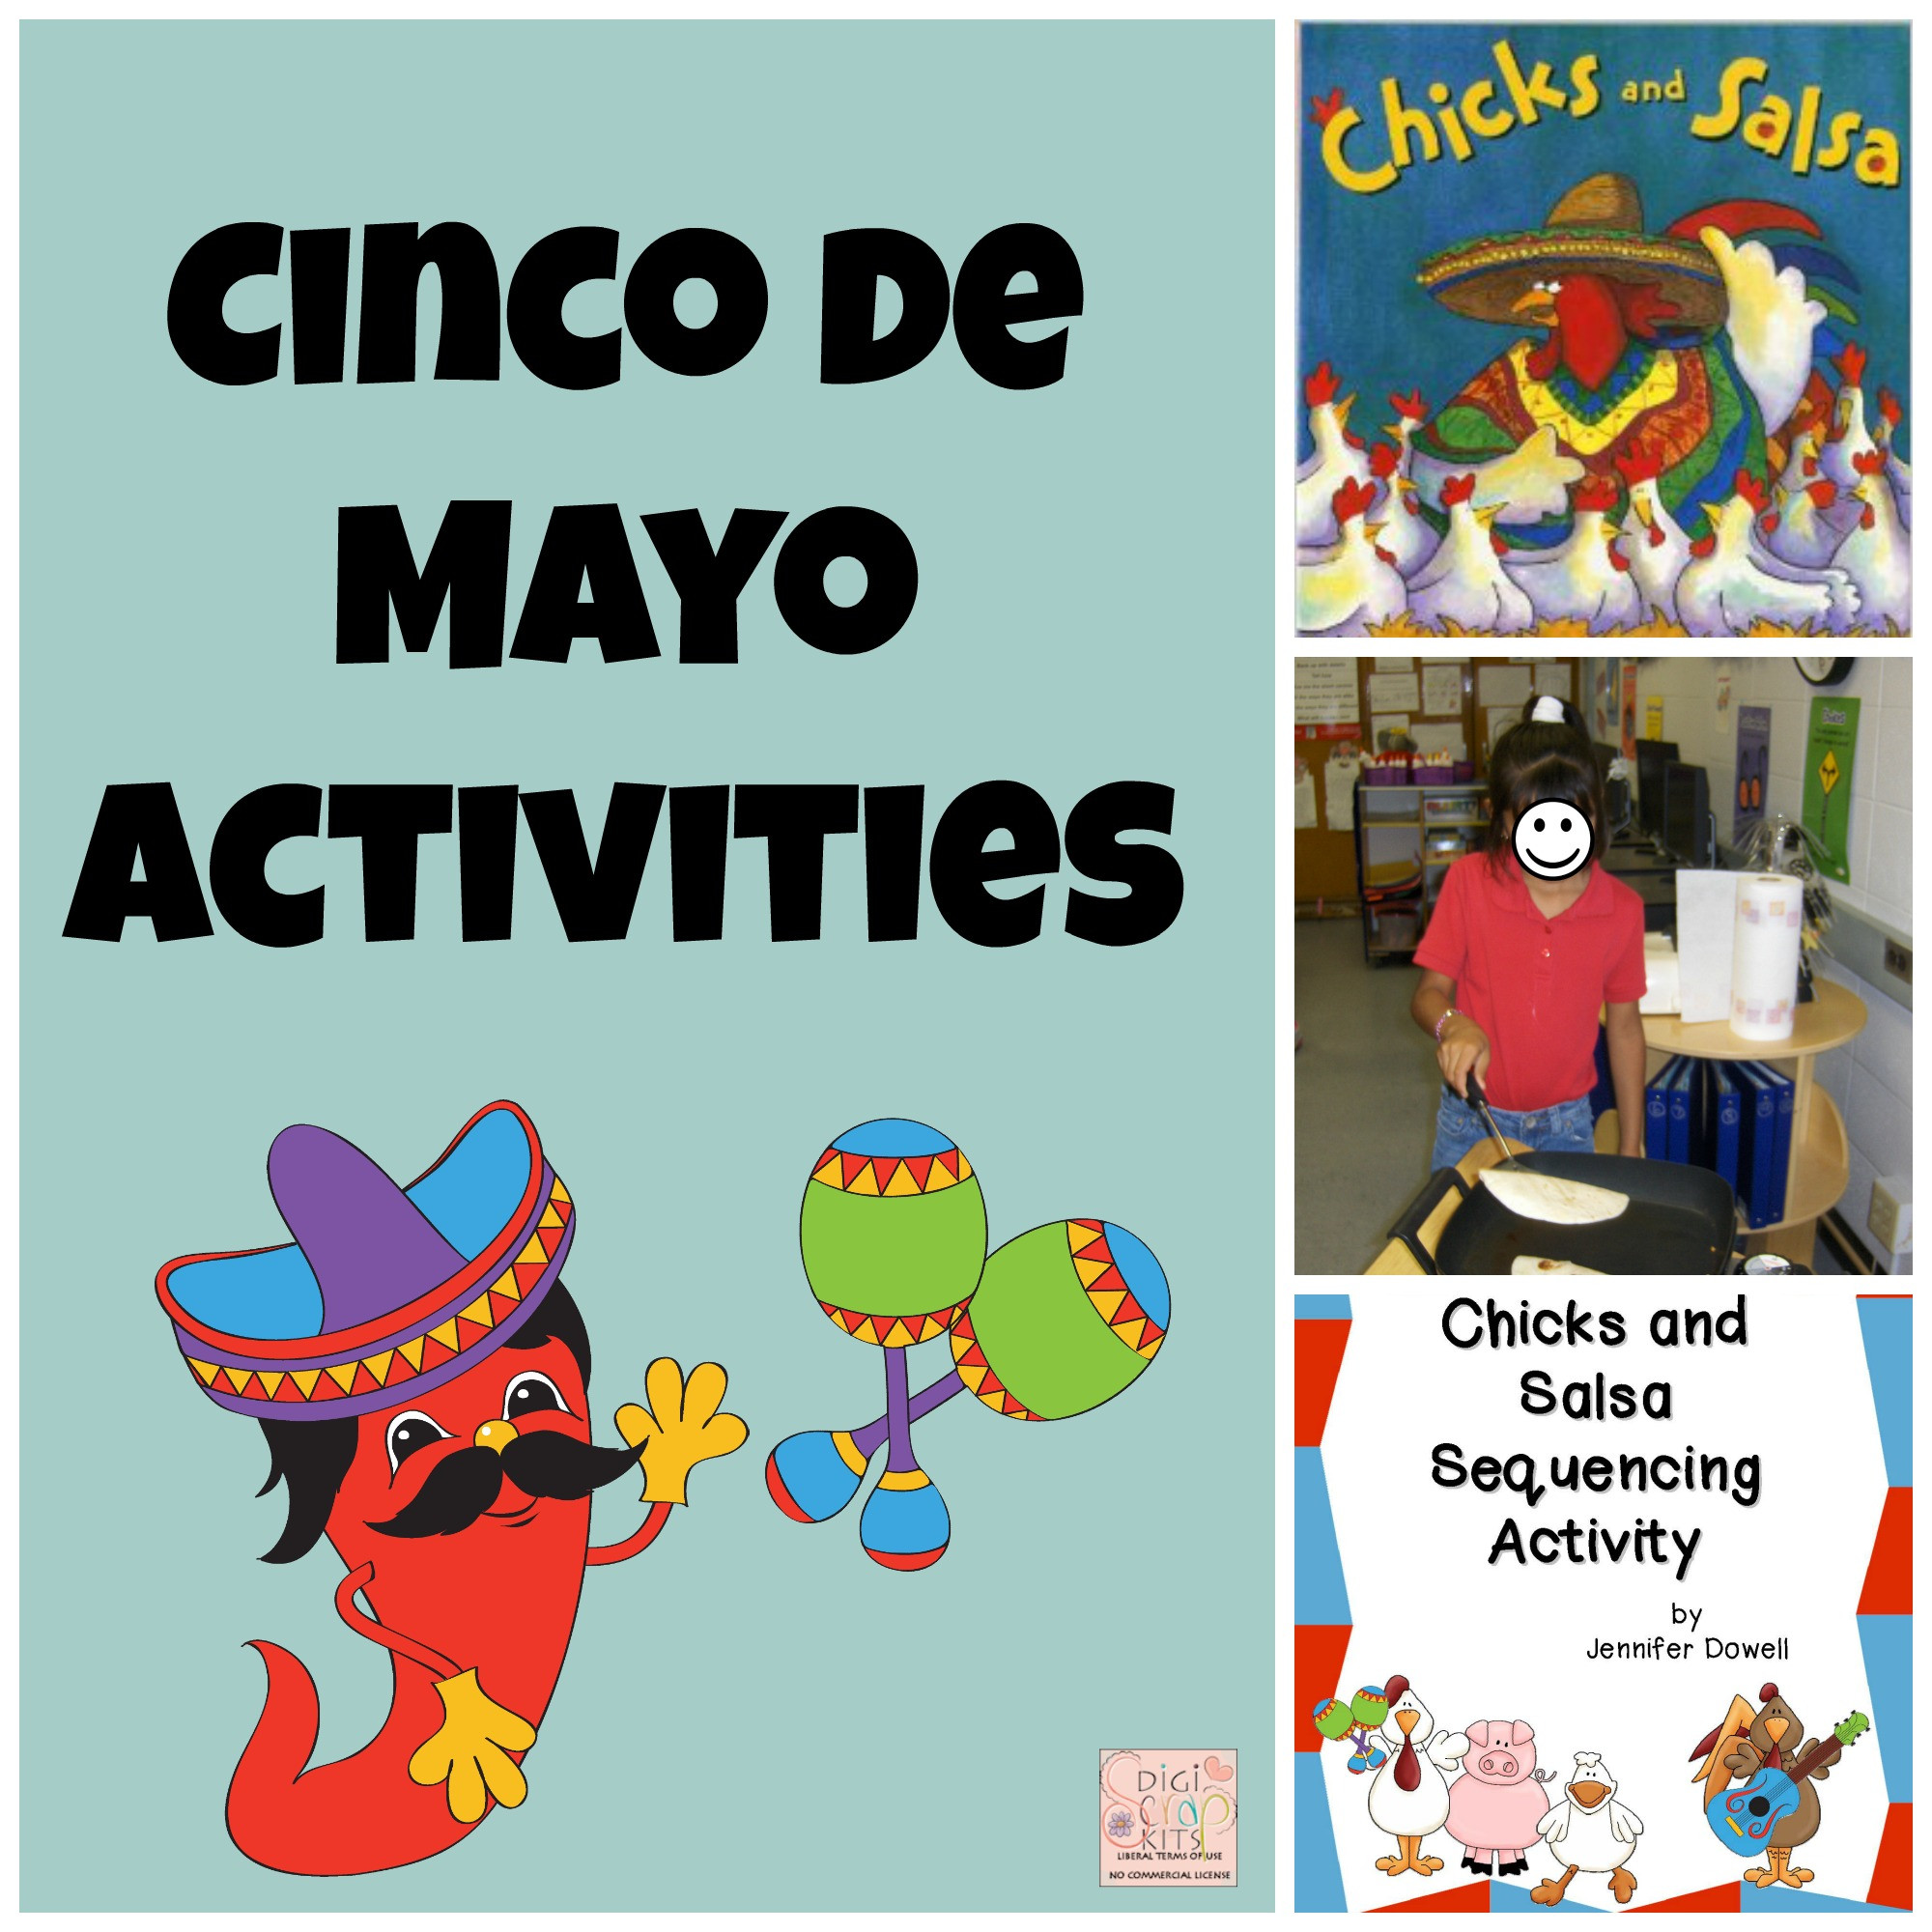 Cinco De Mayo Activities For Middle School
 Cinco de Mayo Activities Chicks and Salsa sequencing